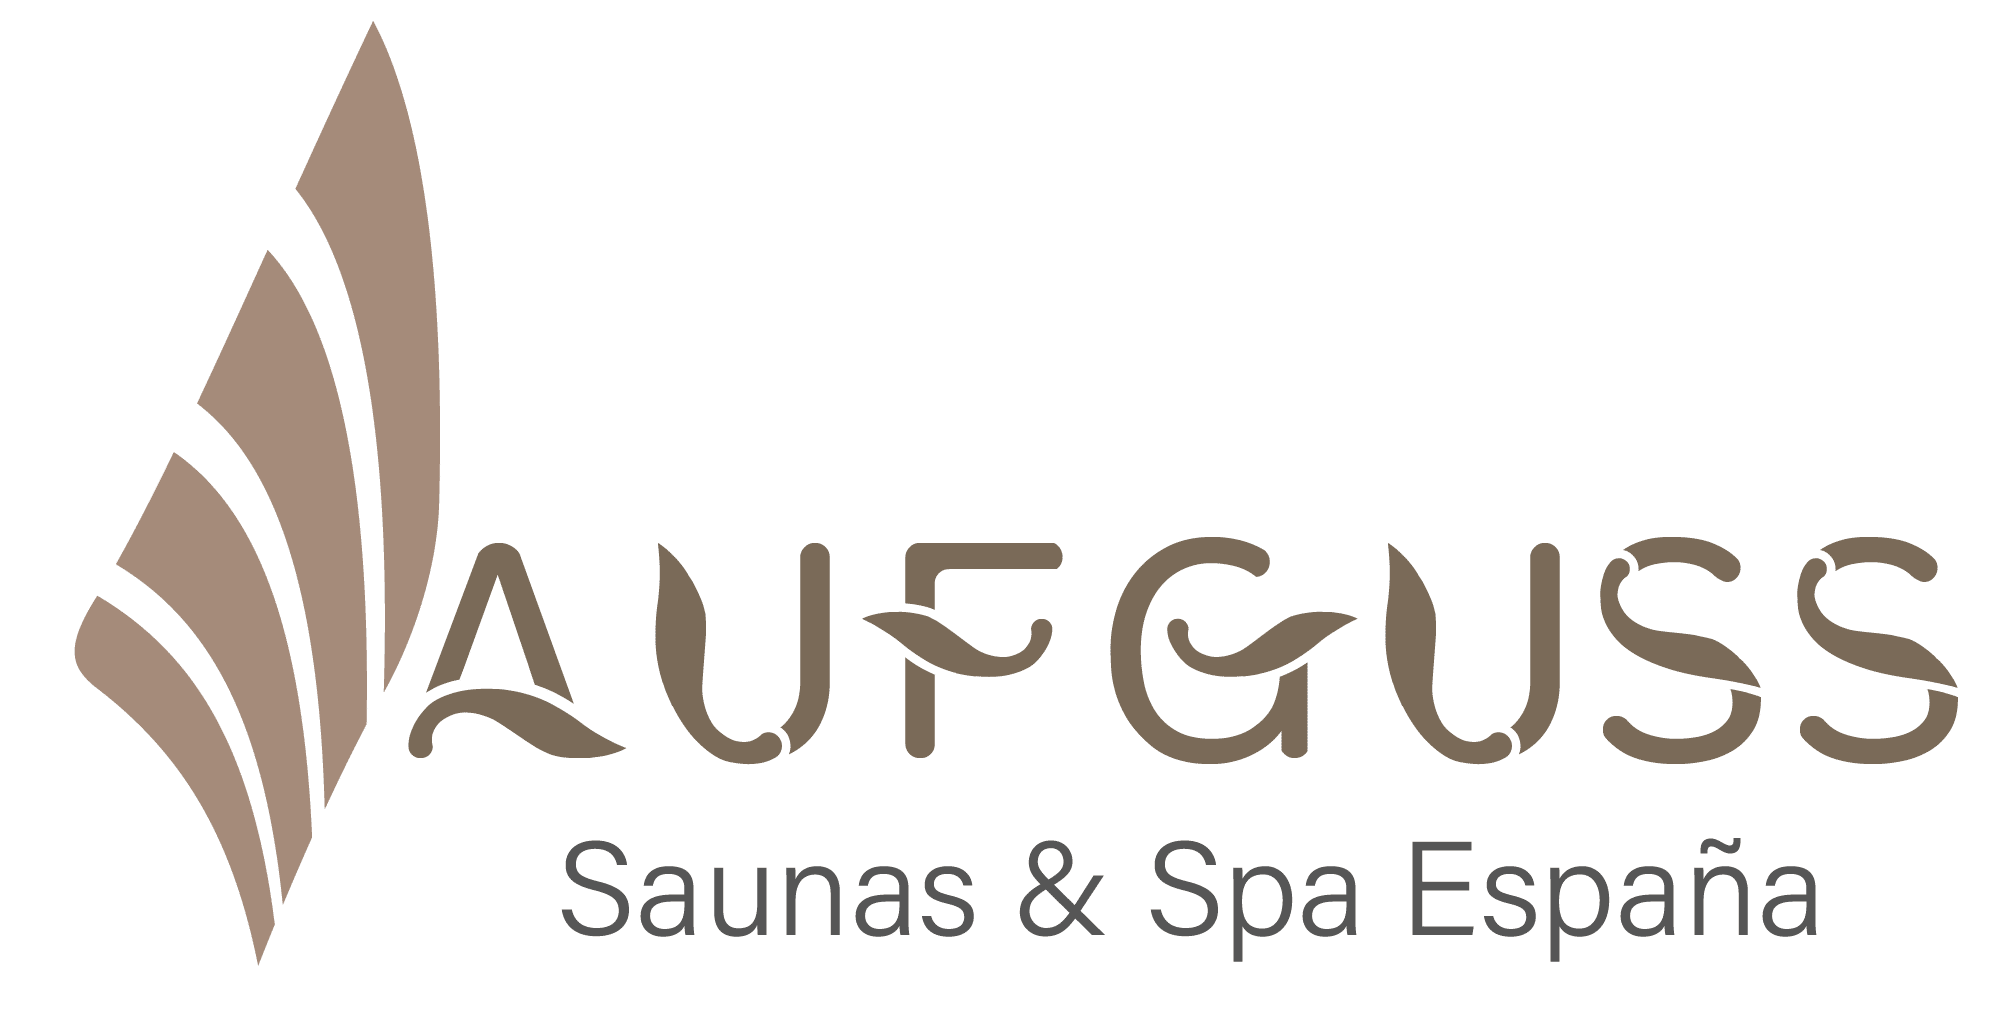 The aufguss sun and spa espirito logo emphasises wellness and fitness.